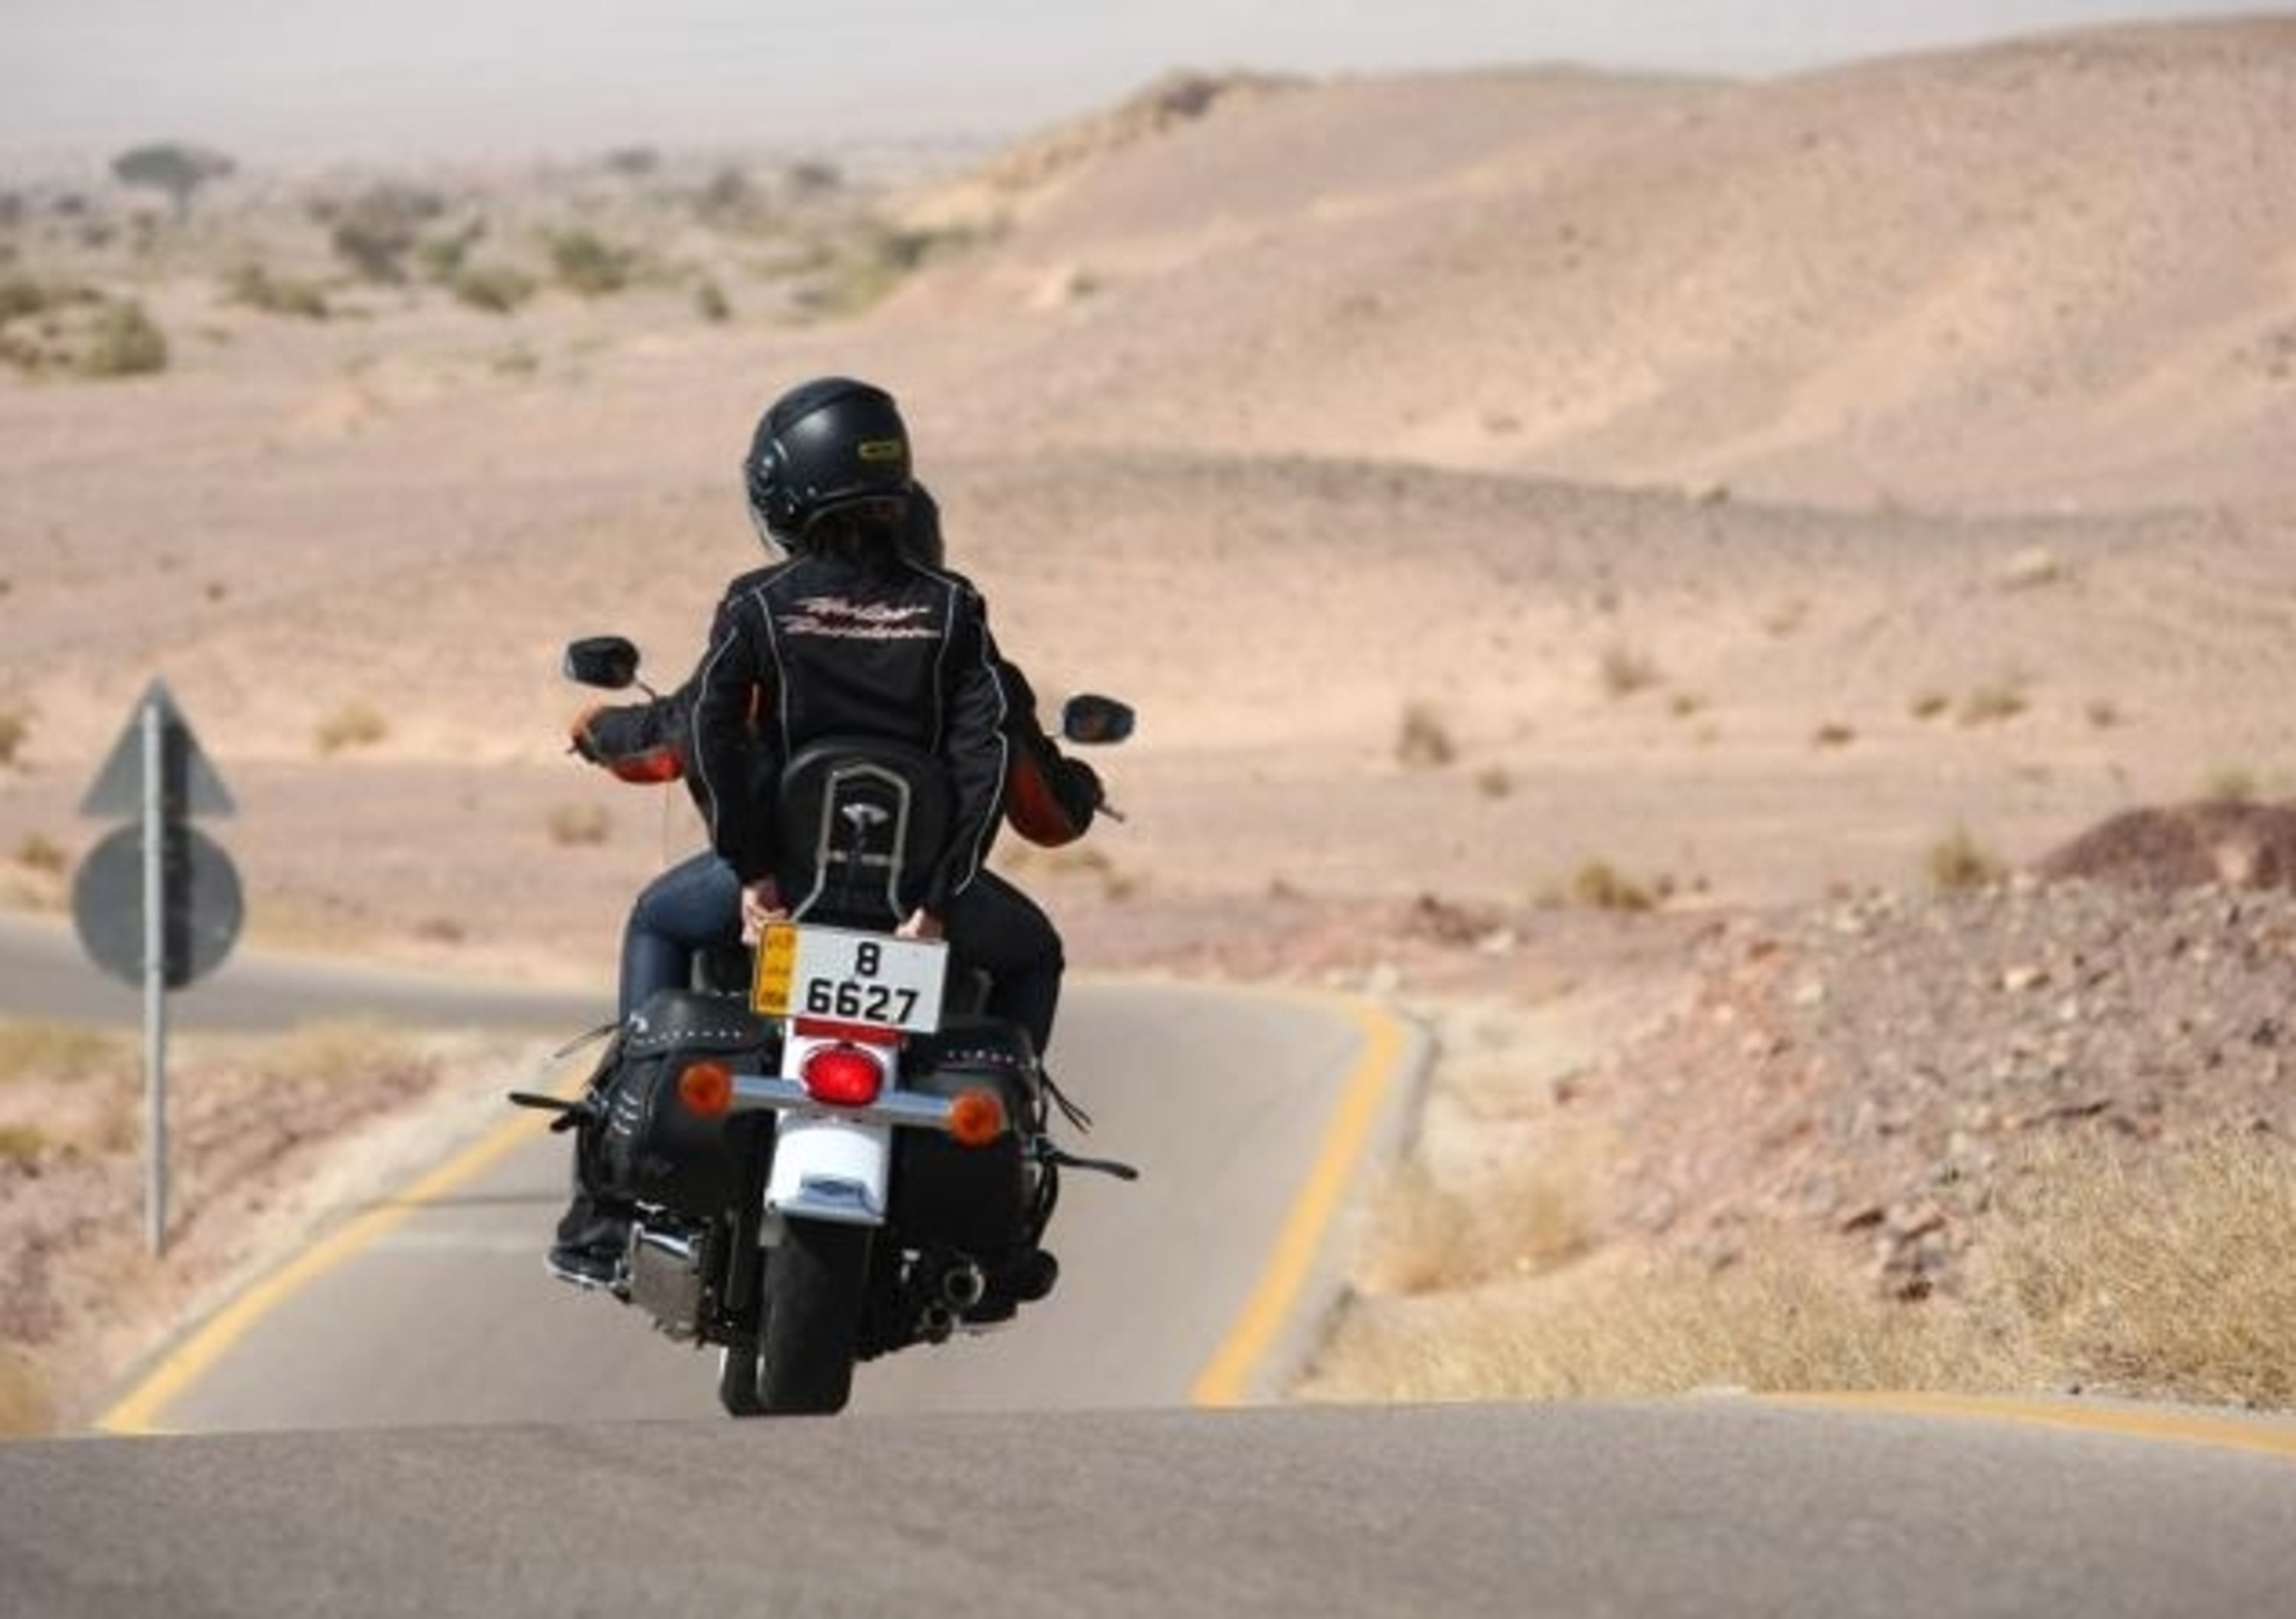 Harley-Davidson Authorized Tours: 157 viaggi in tutto il mondo